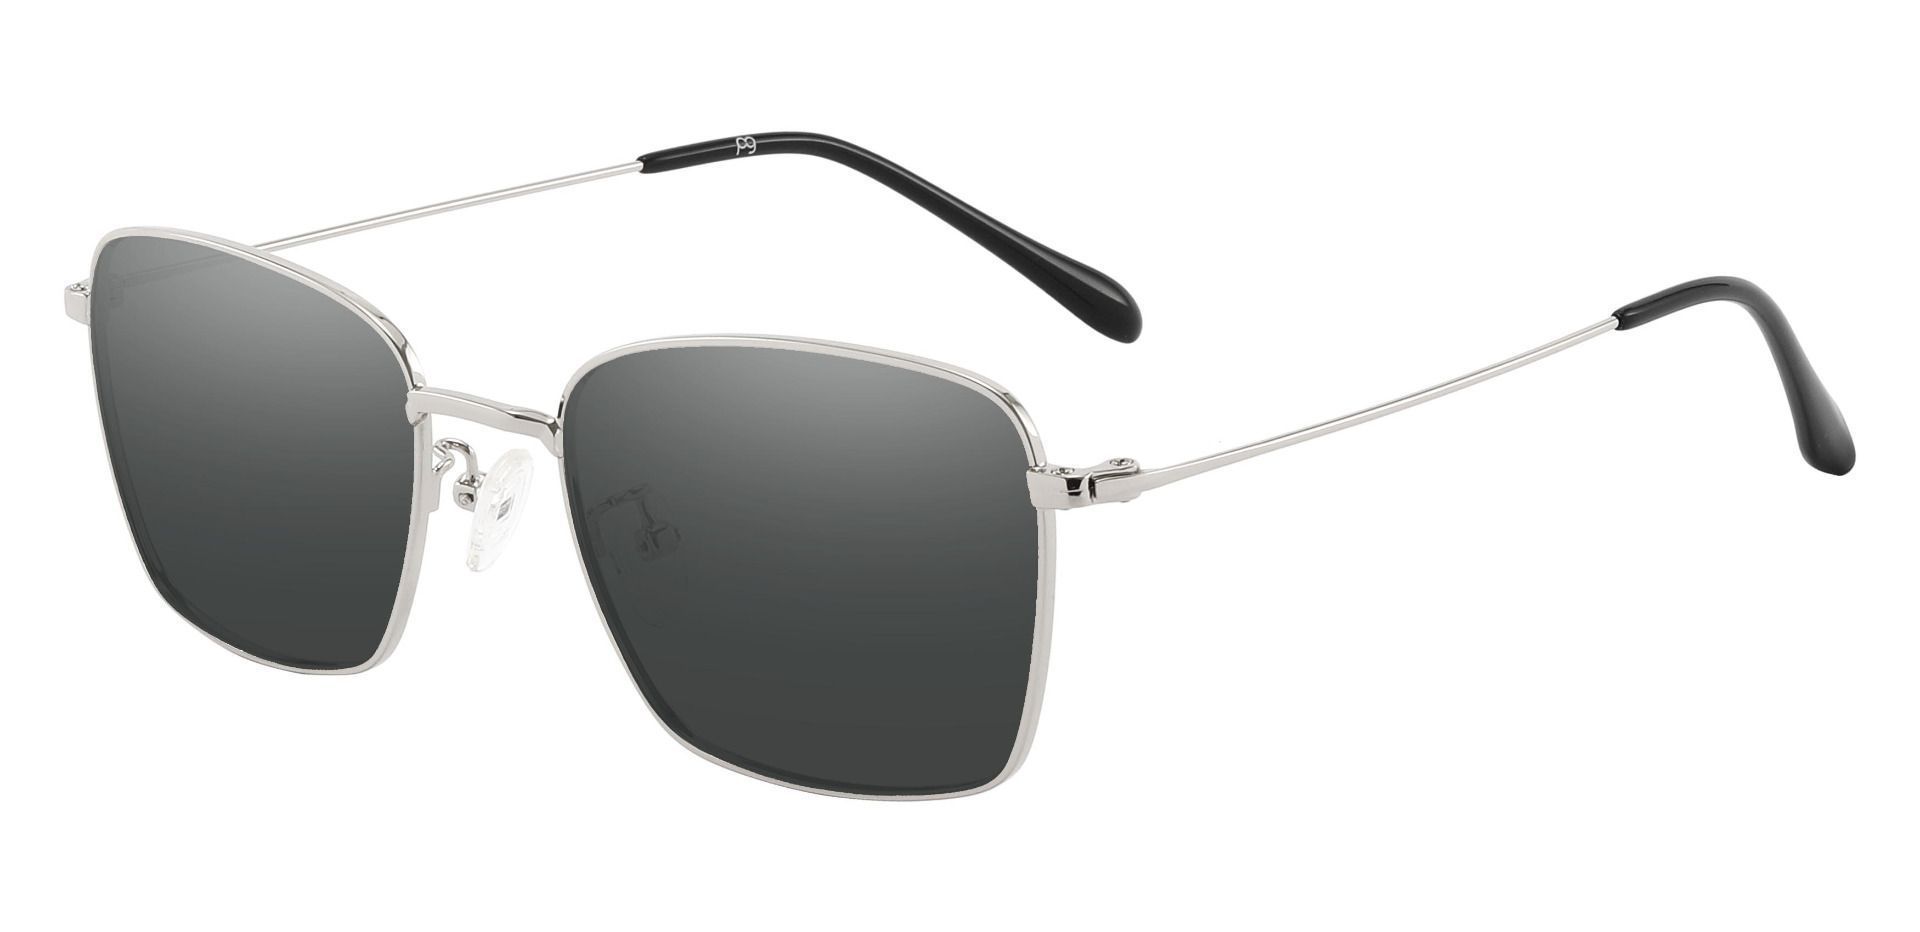 Sherwood Rectangle Prescription Sunglasses - Silver Frame With Gray Lenses